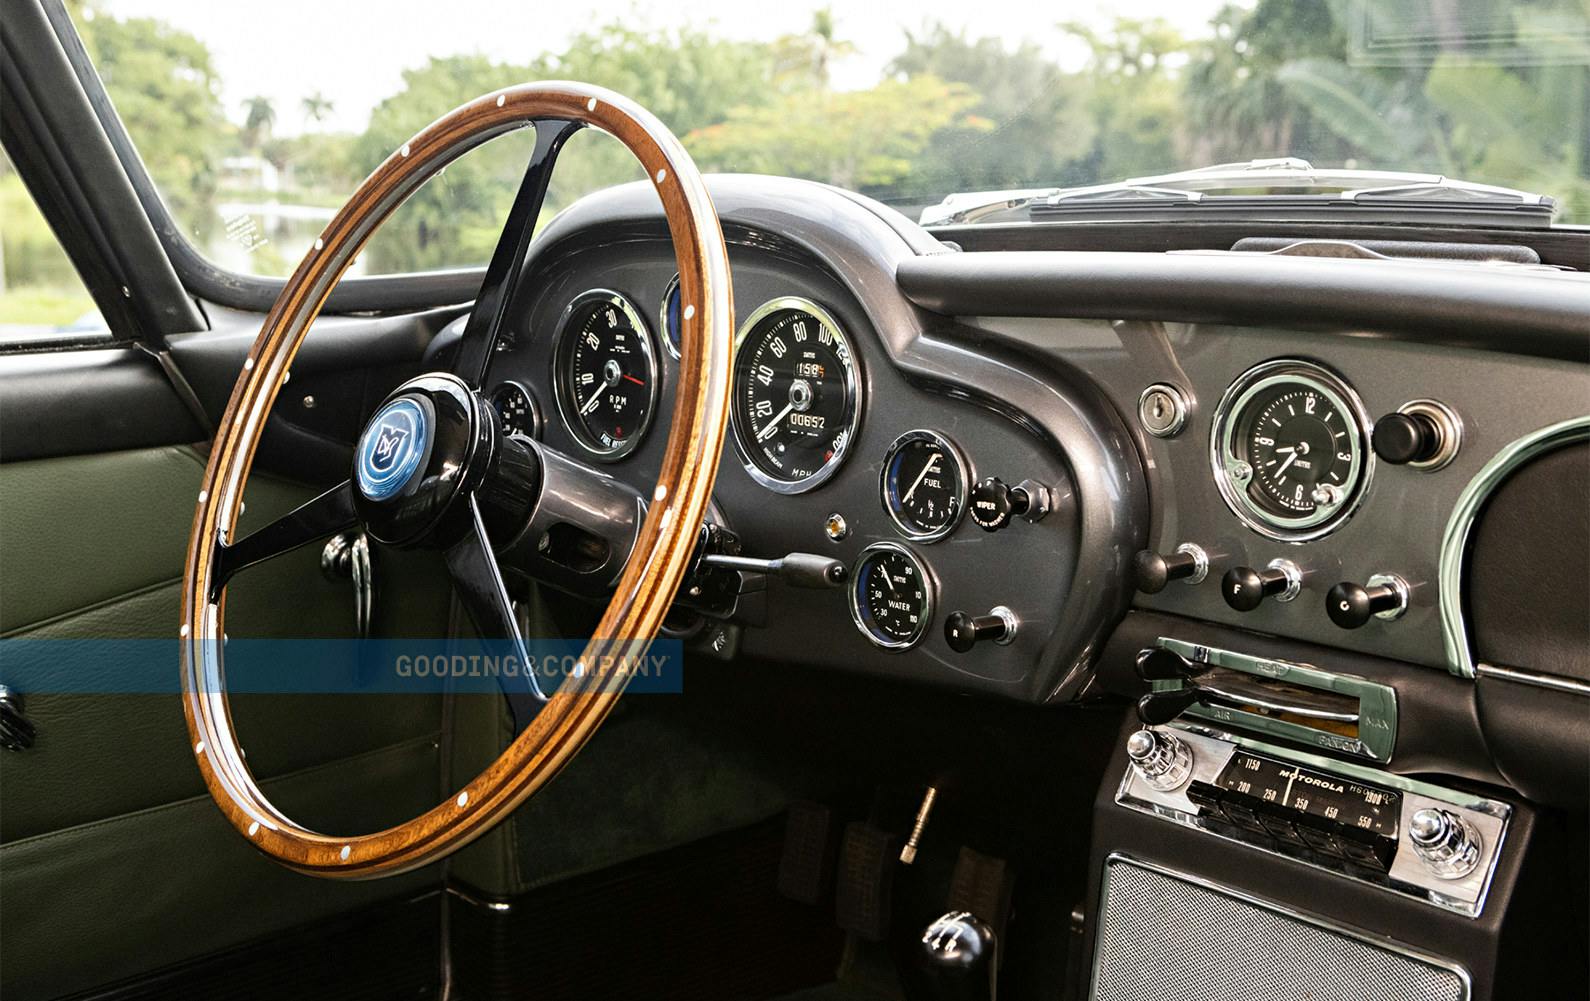 1961 Aston Martin DB4 GT interior